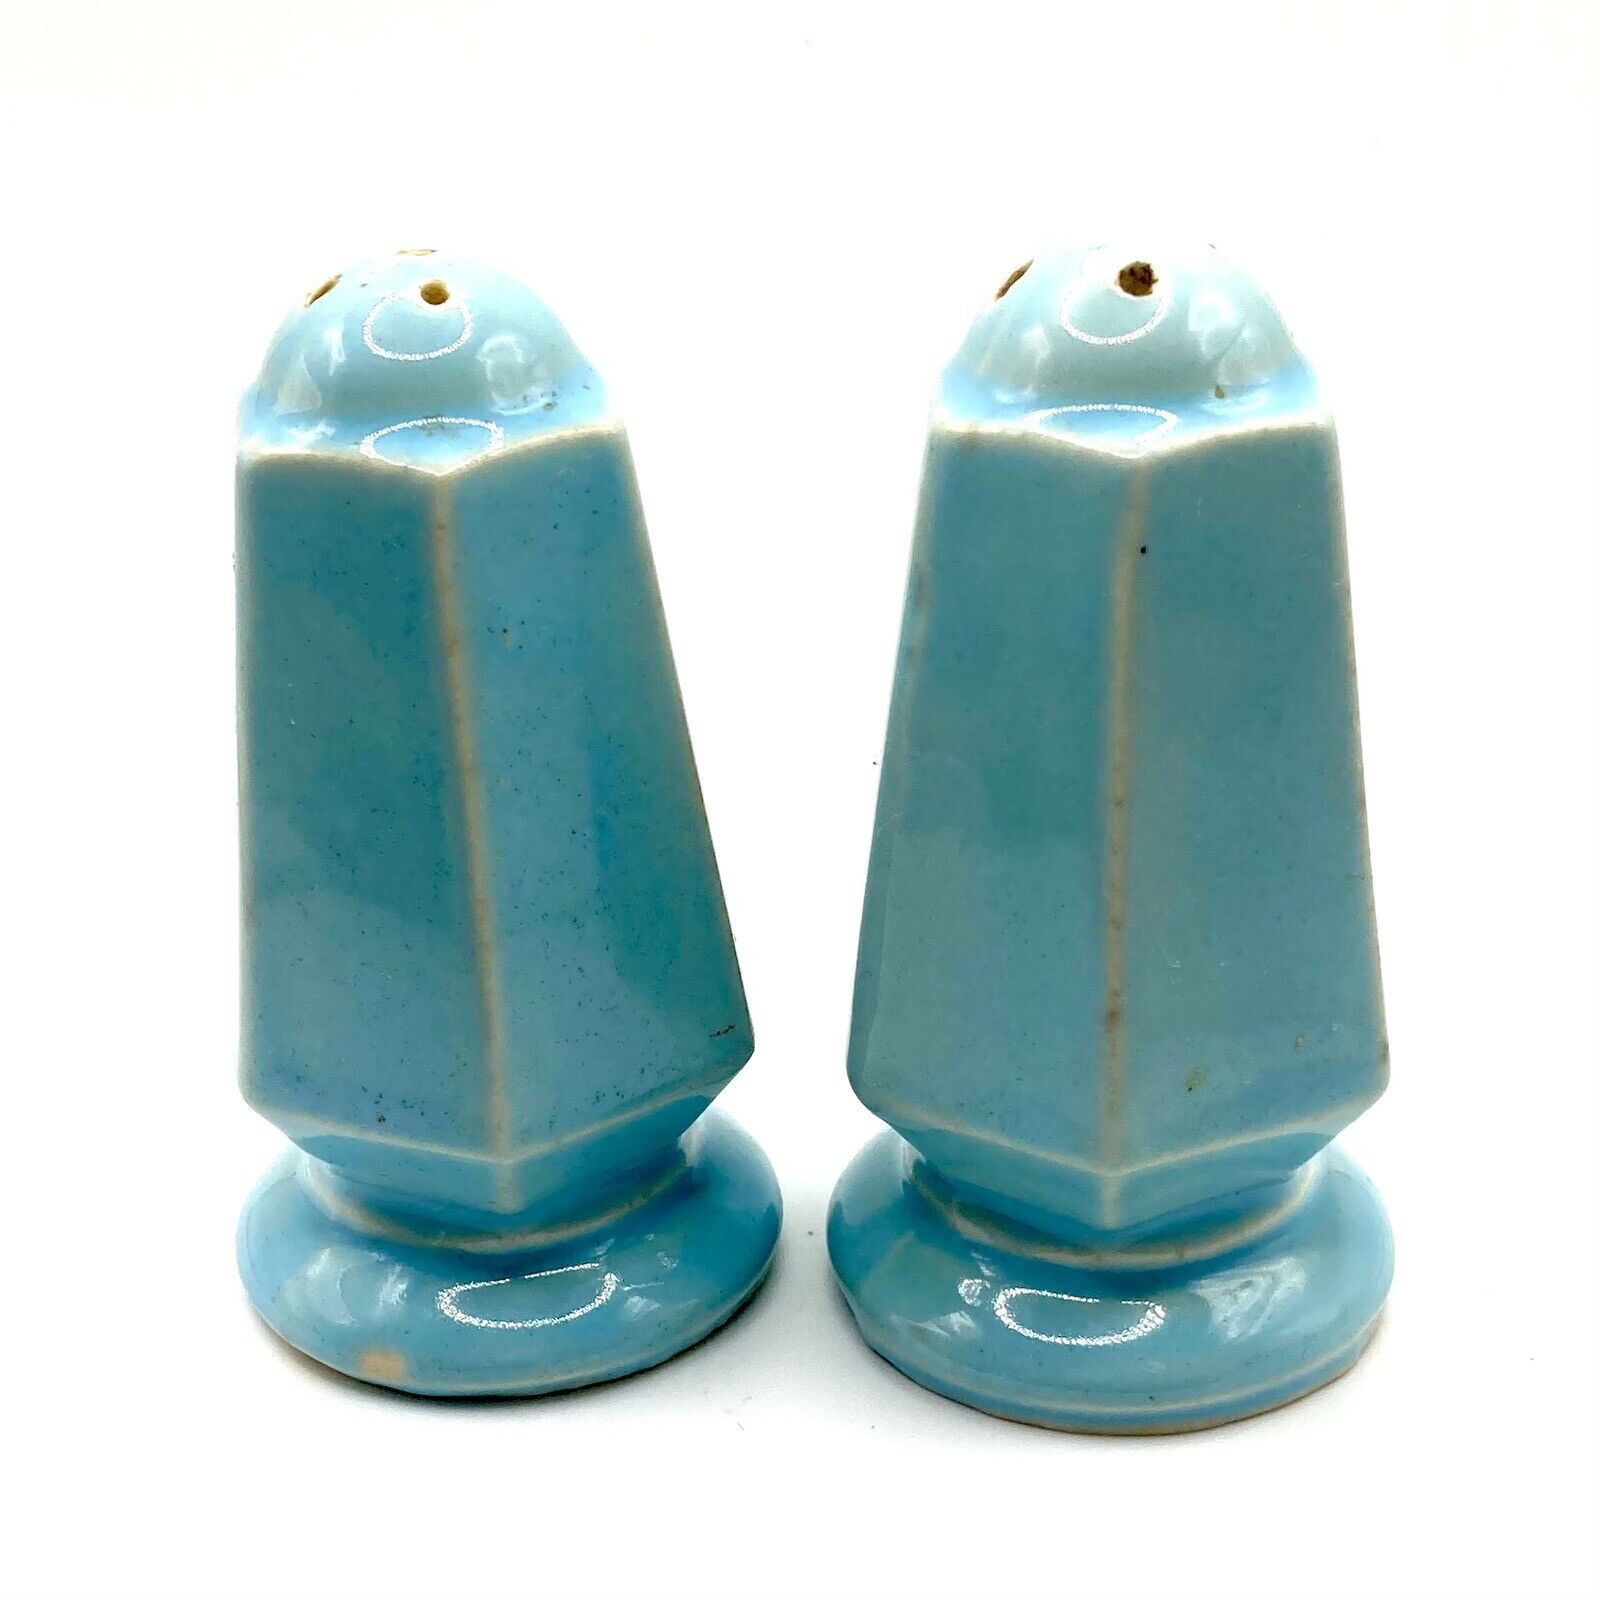 Vintage Art Deco Light Blue Turquoise Salt & Pepper Shakers With Corks Ceramic